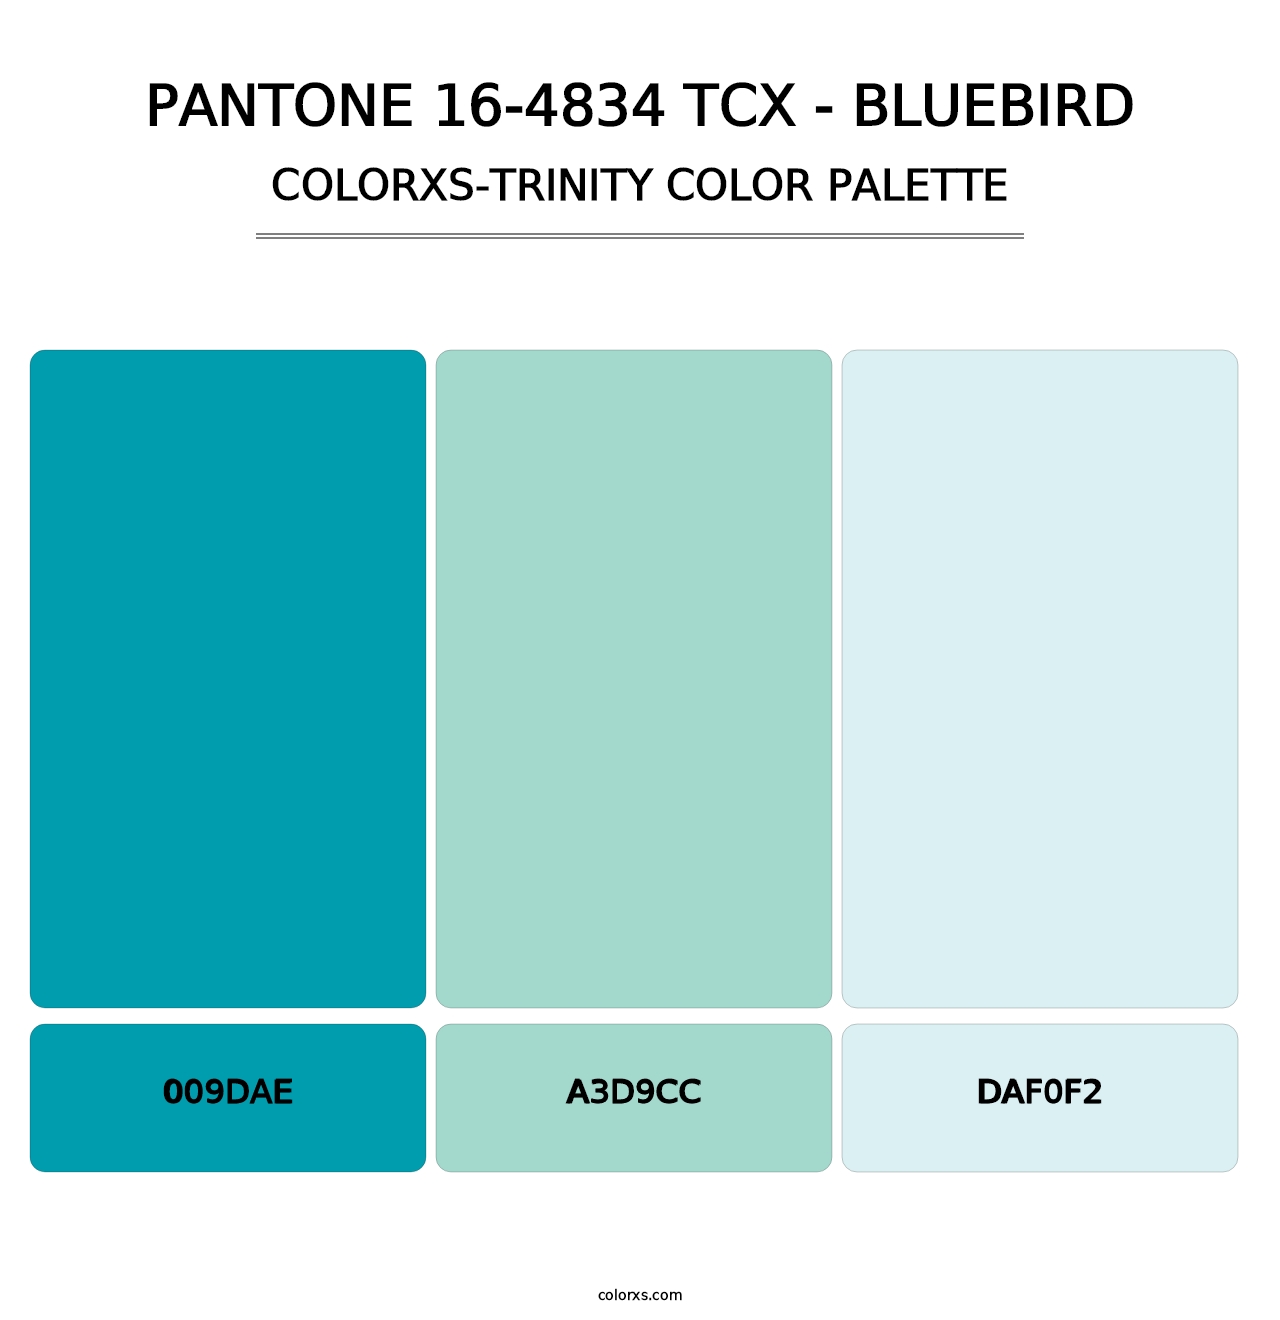 PANTONE 16-4834 TCX - Bluebird - Colorxs Trinity Palette